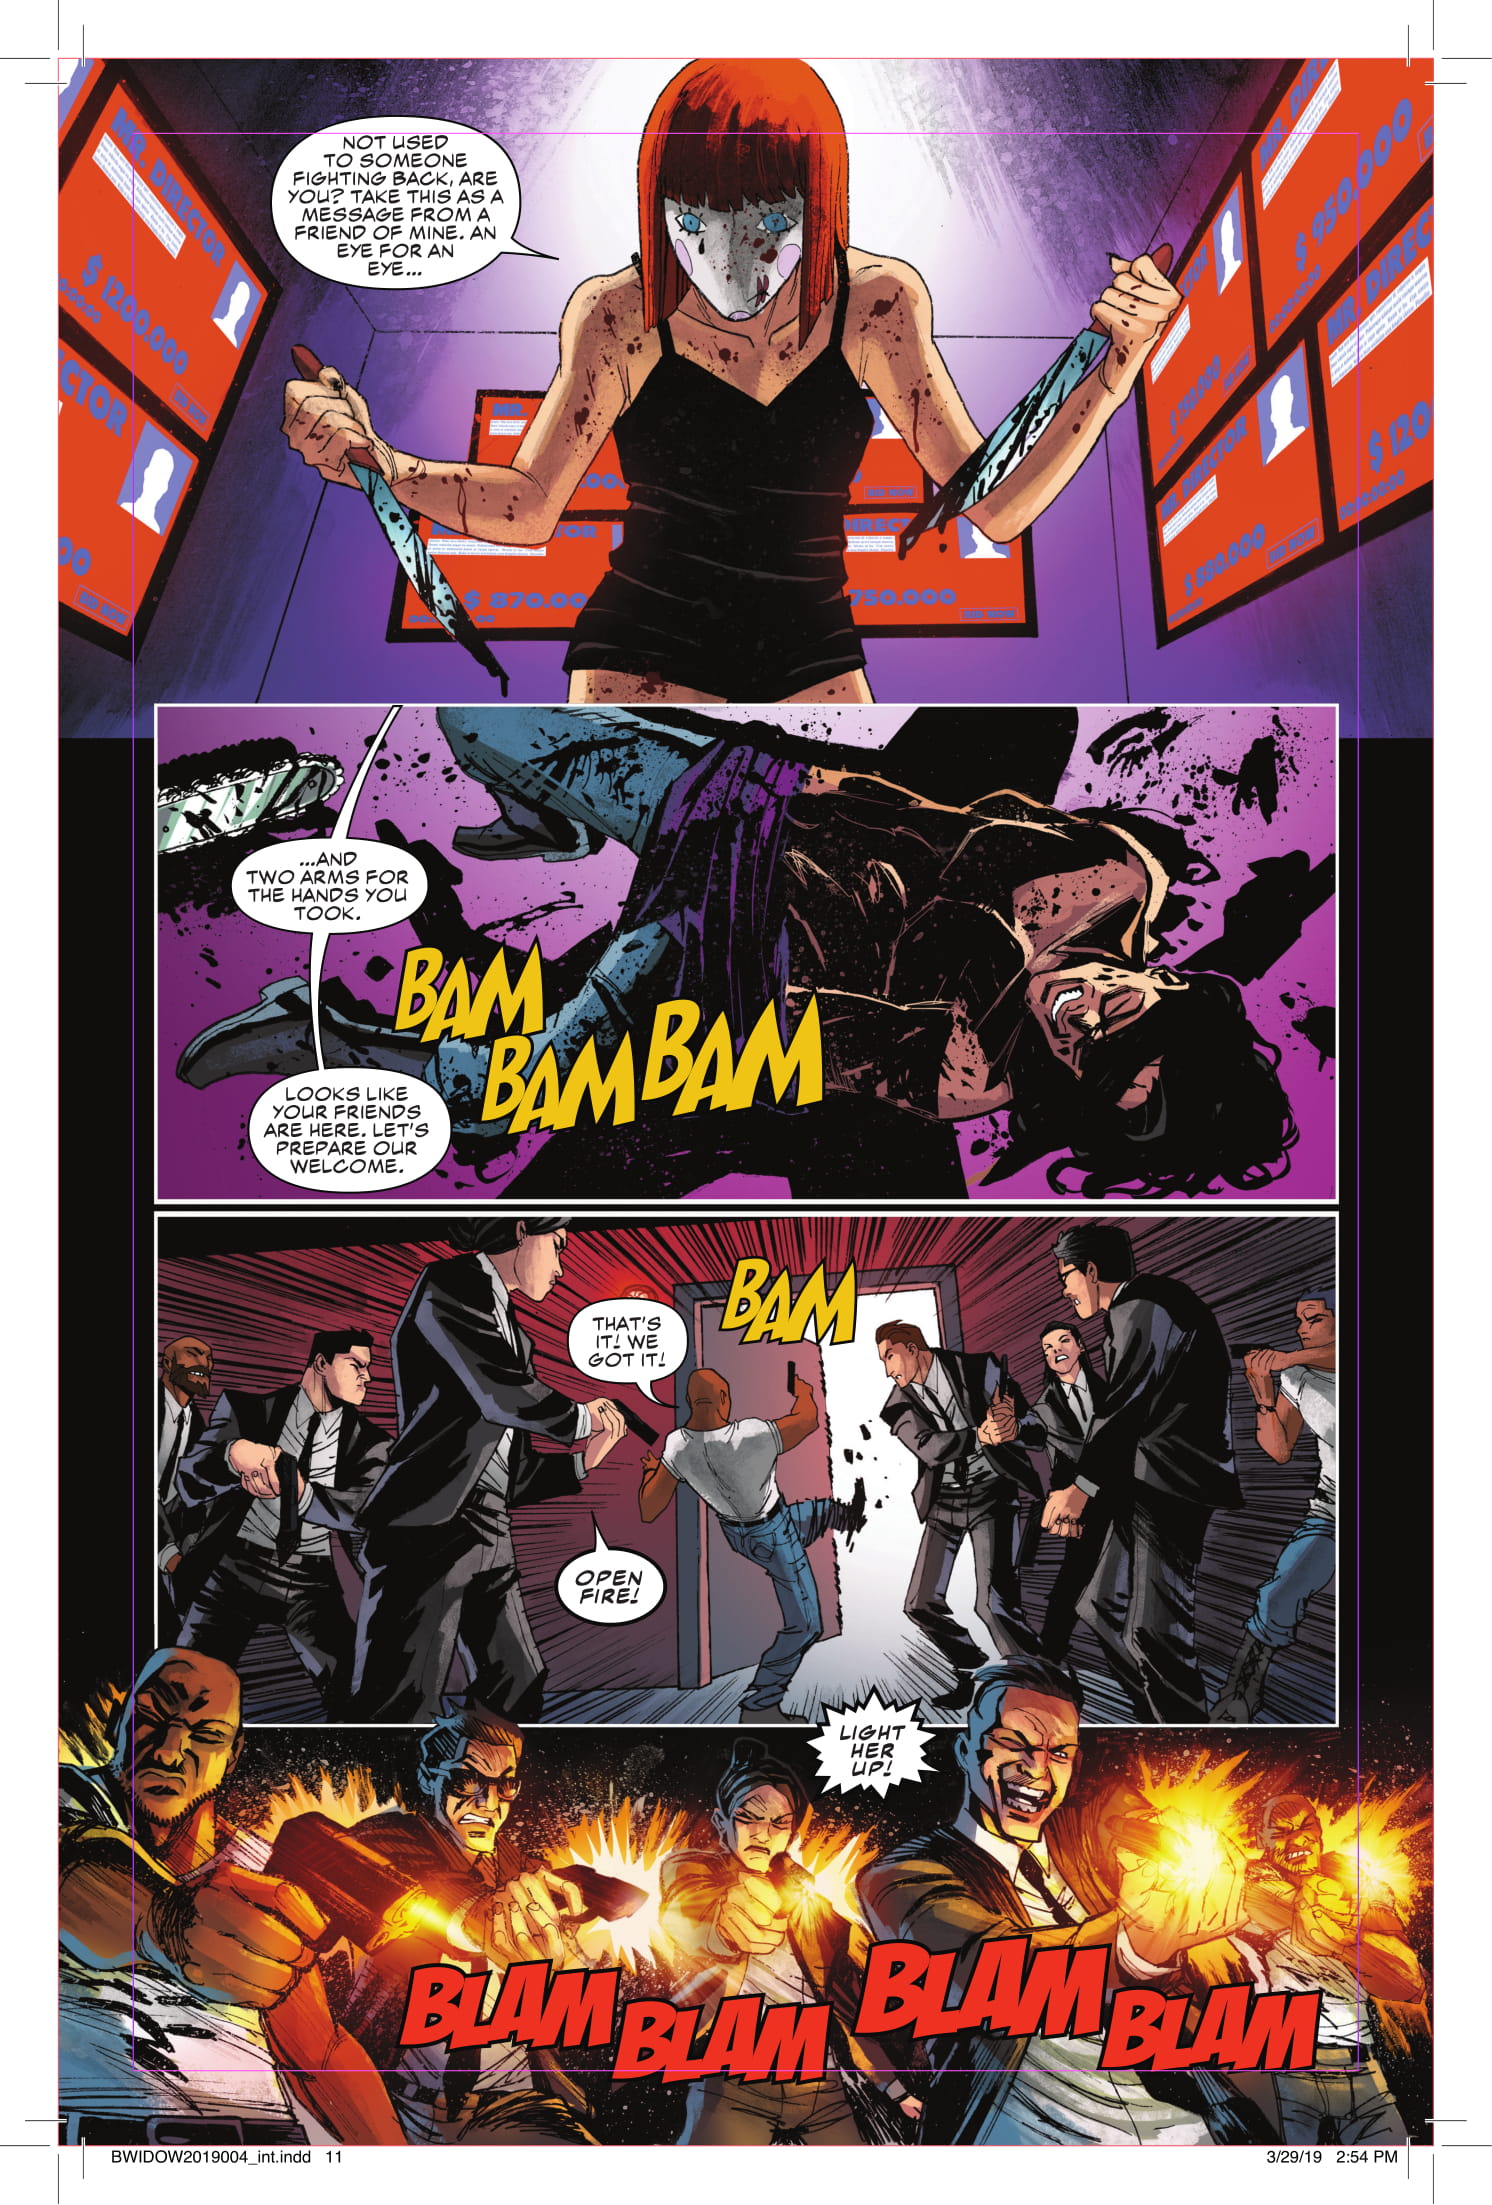 Black Widow #4 page 2